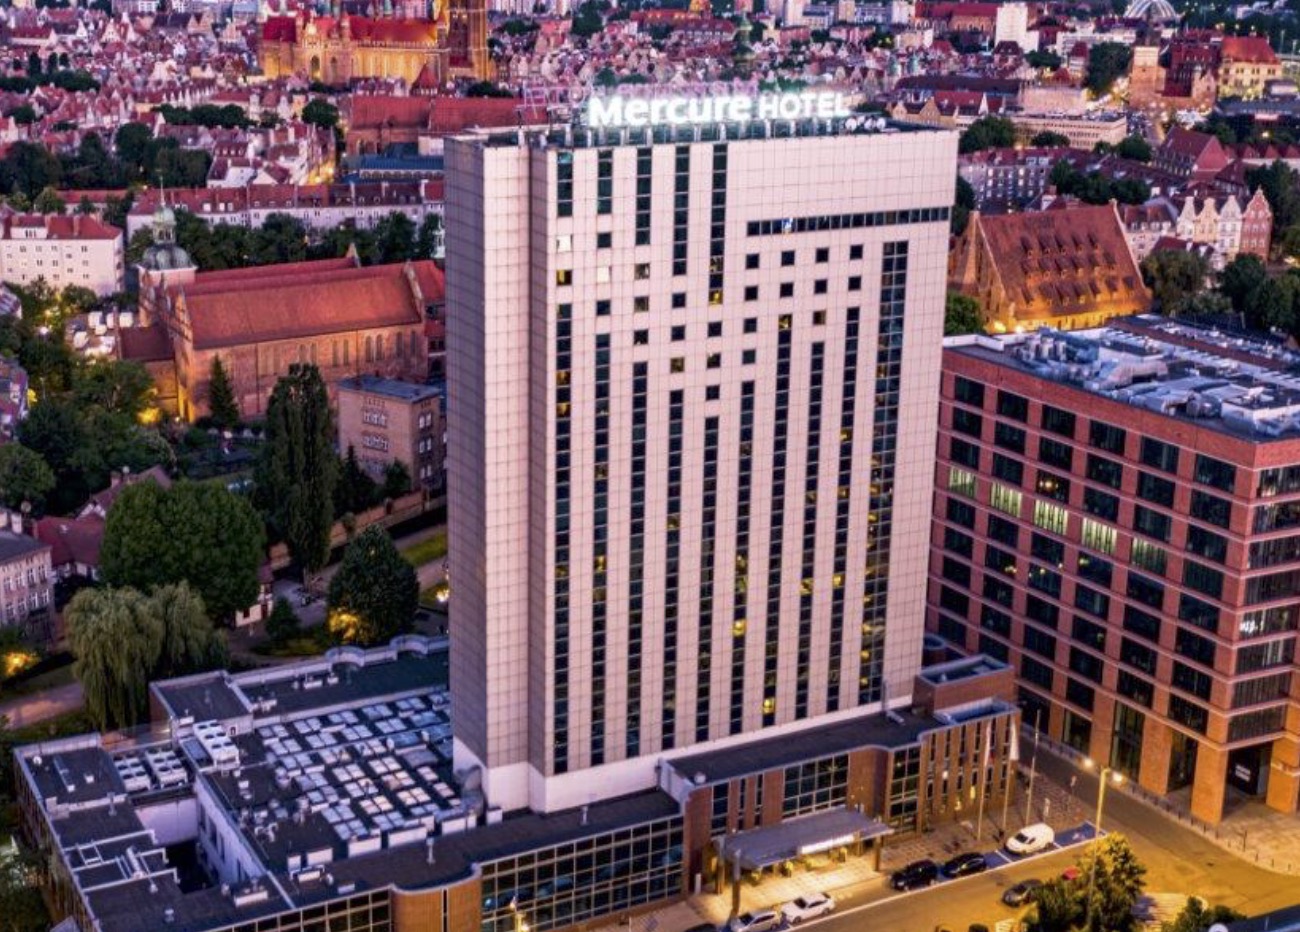 Hotel Copernicus - Toruń